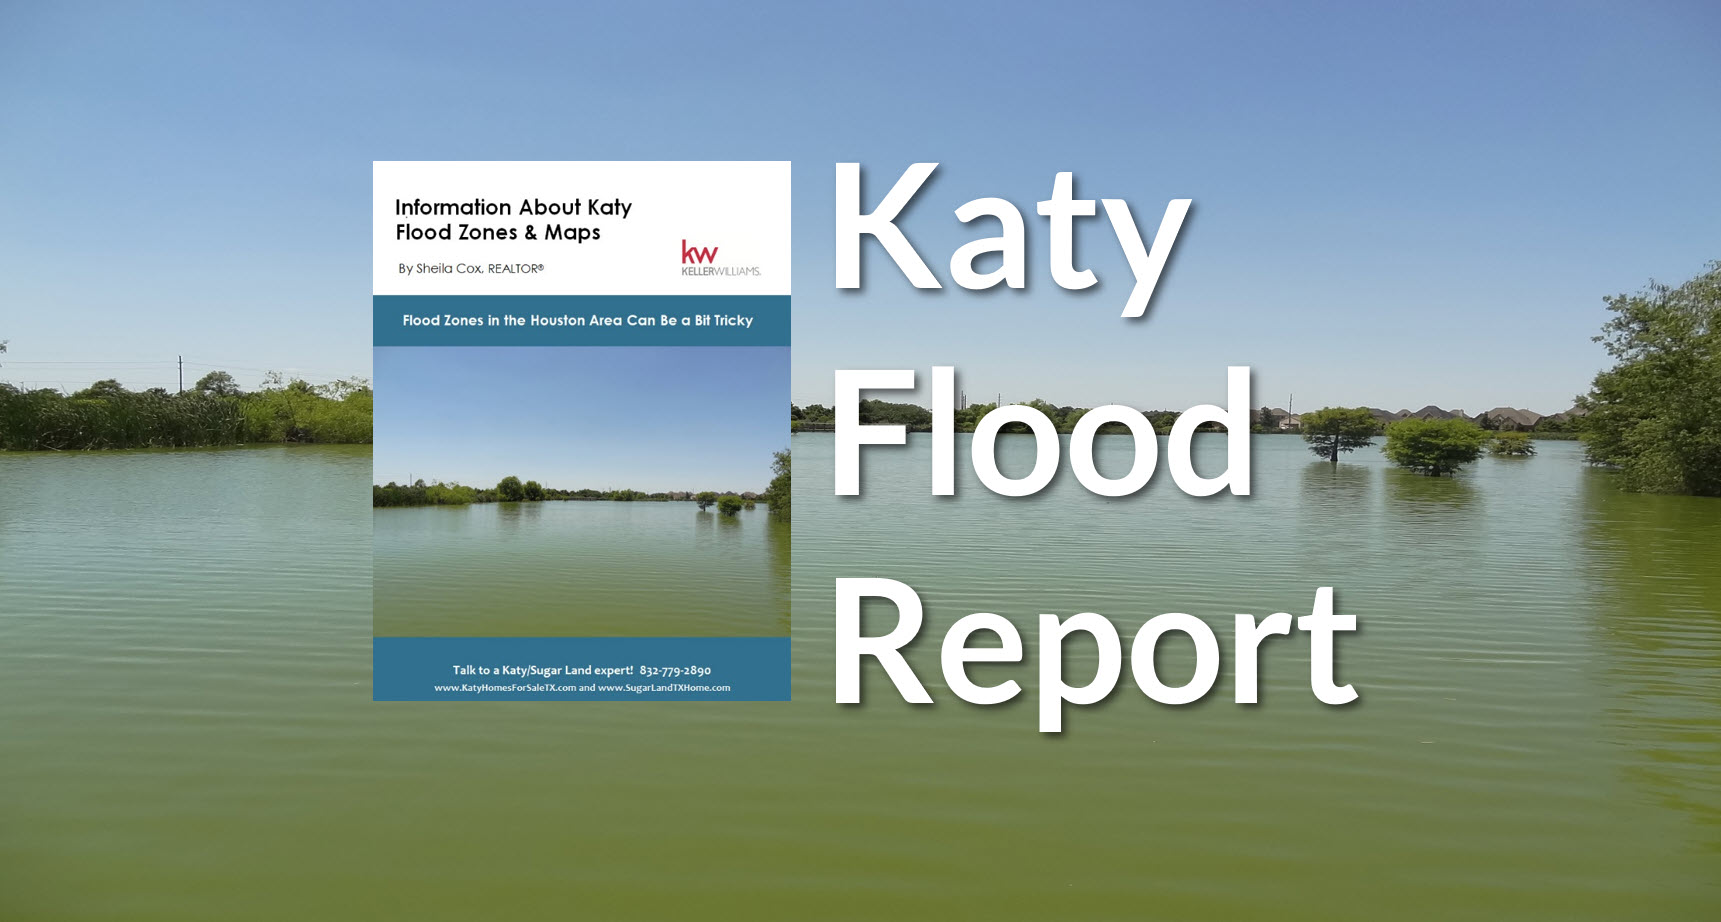 katy flood report